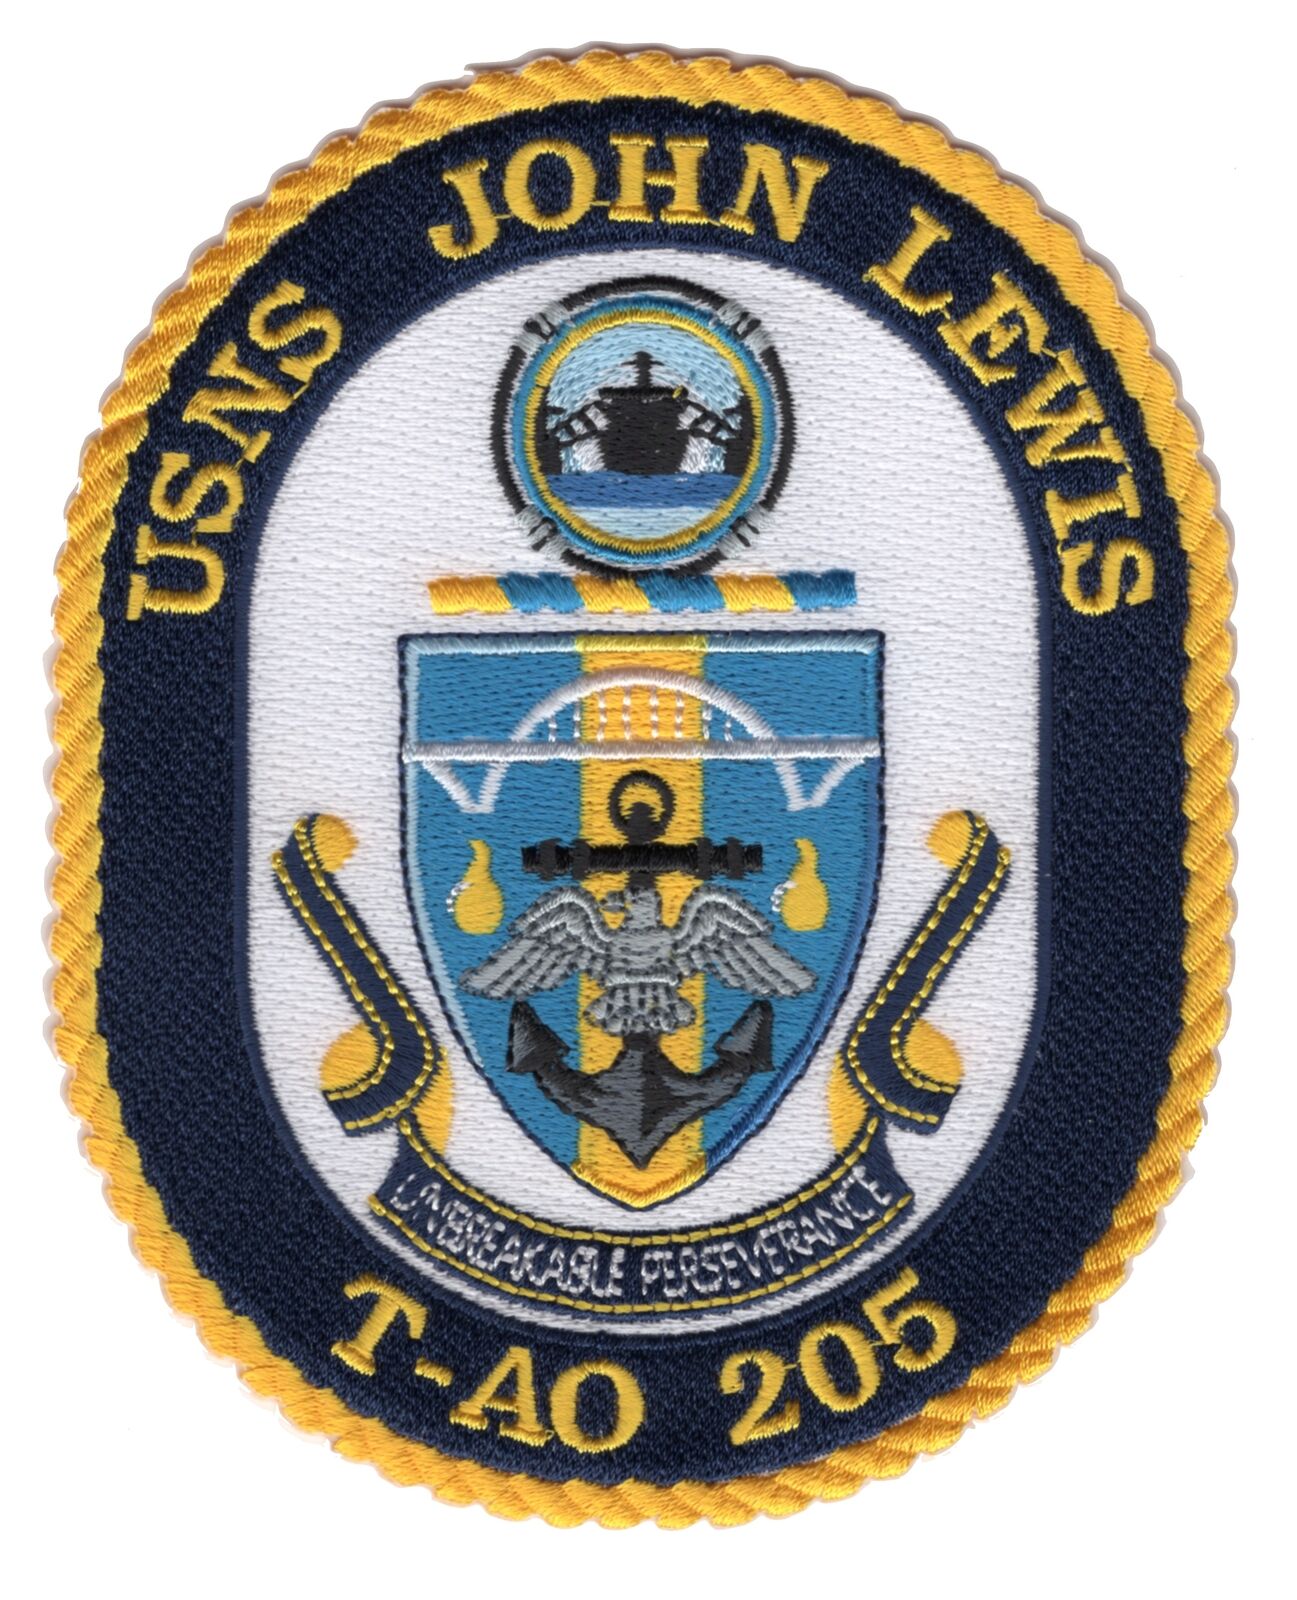 T-AO 205 USNS John Lewis Patch